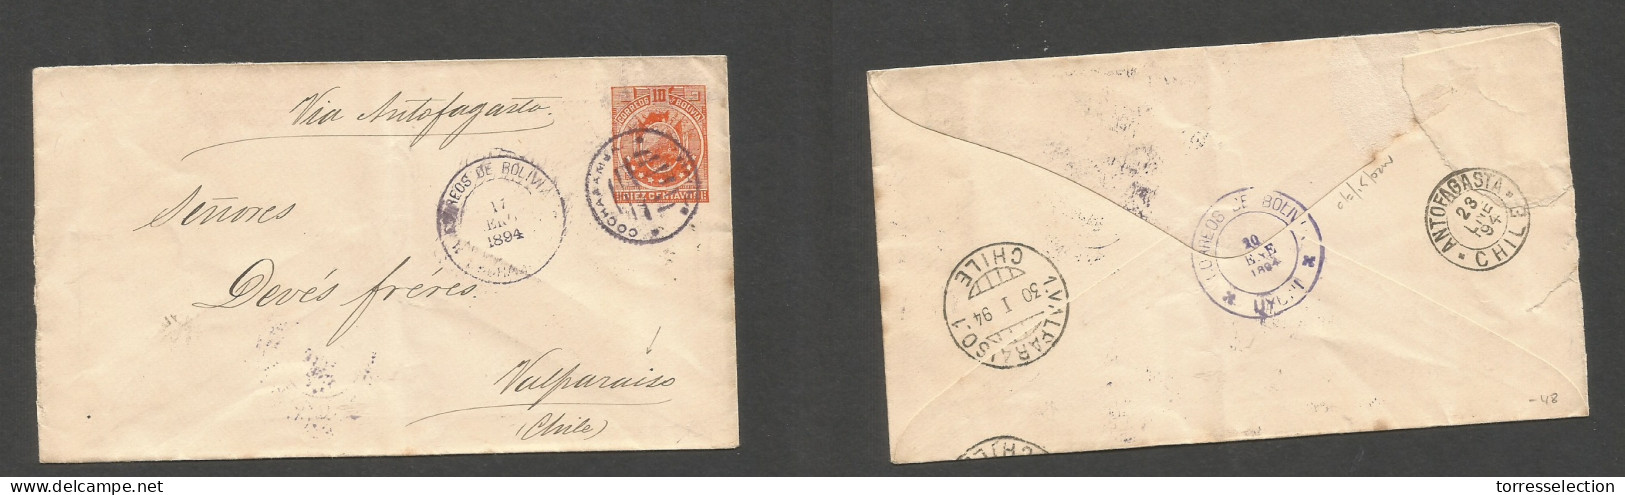 BOLIVIA. 1894 (17 Ene) Cochahamba - Chile, Valparaiso (30 Jan) Via Antofagasta - Ujuny, 10c Orange Stat Env. Fine. SALE. - Bolivie